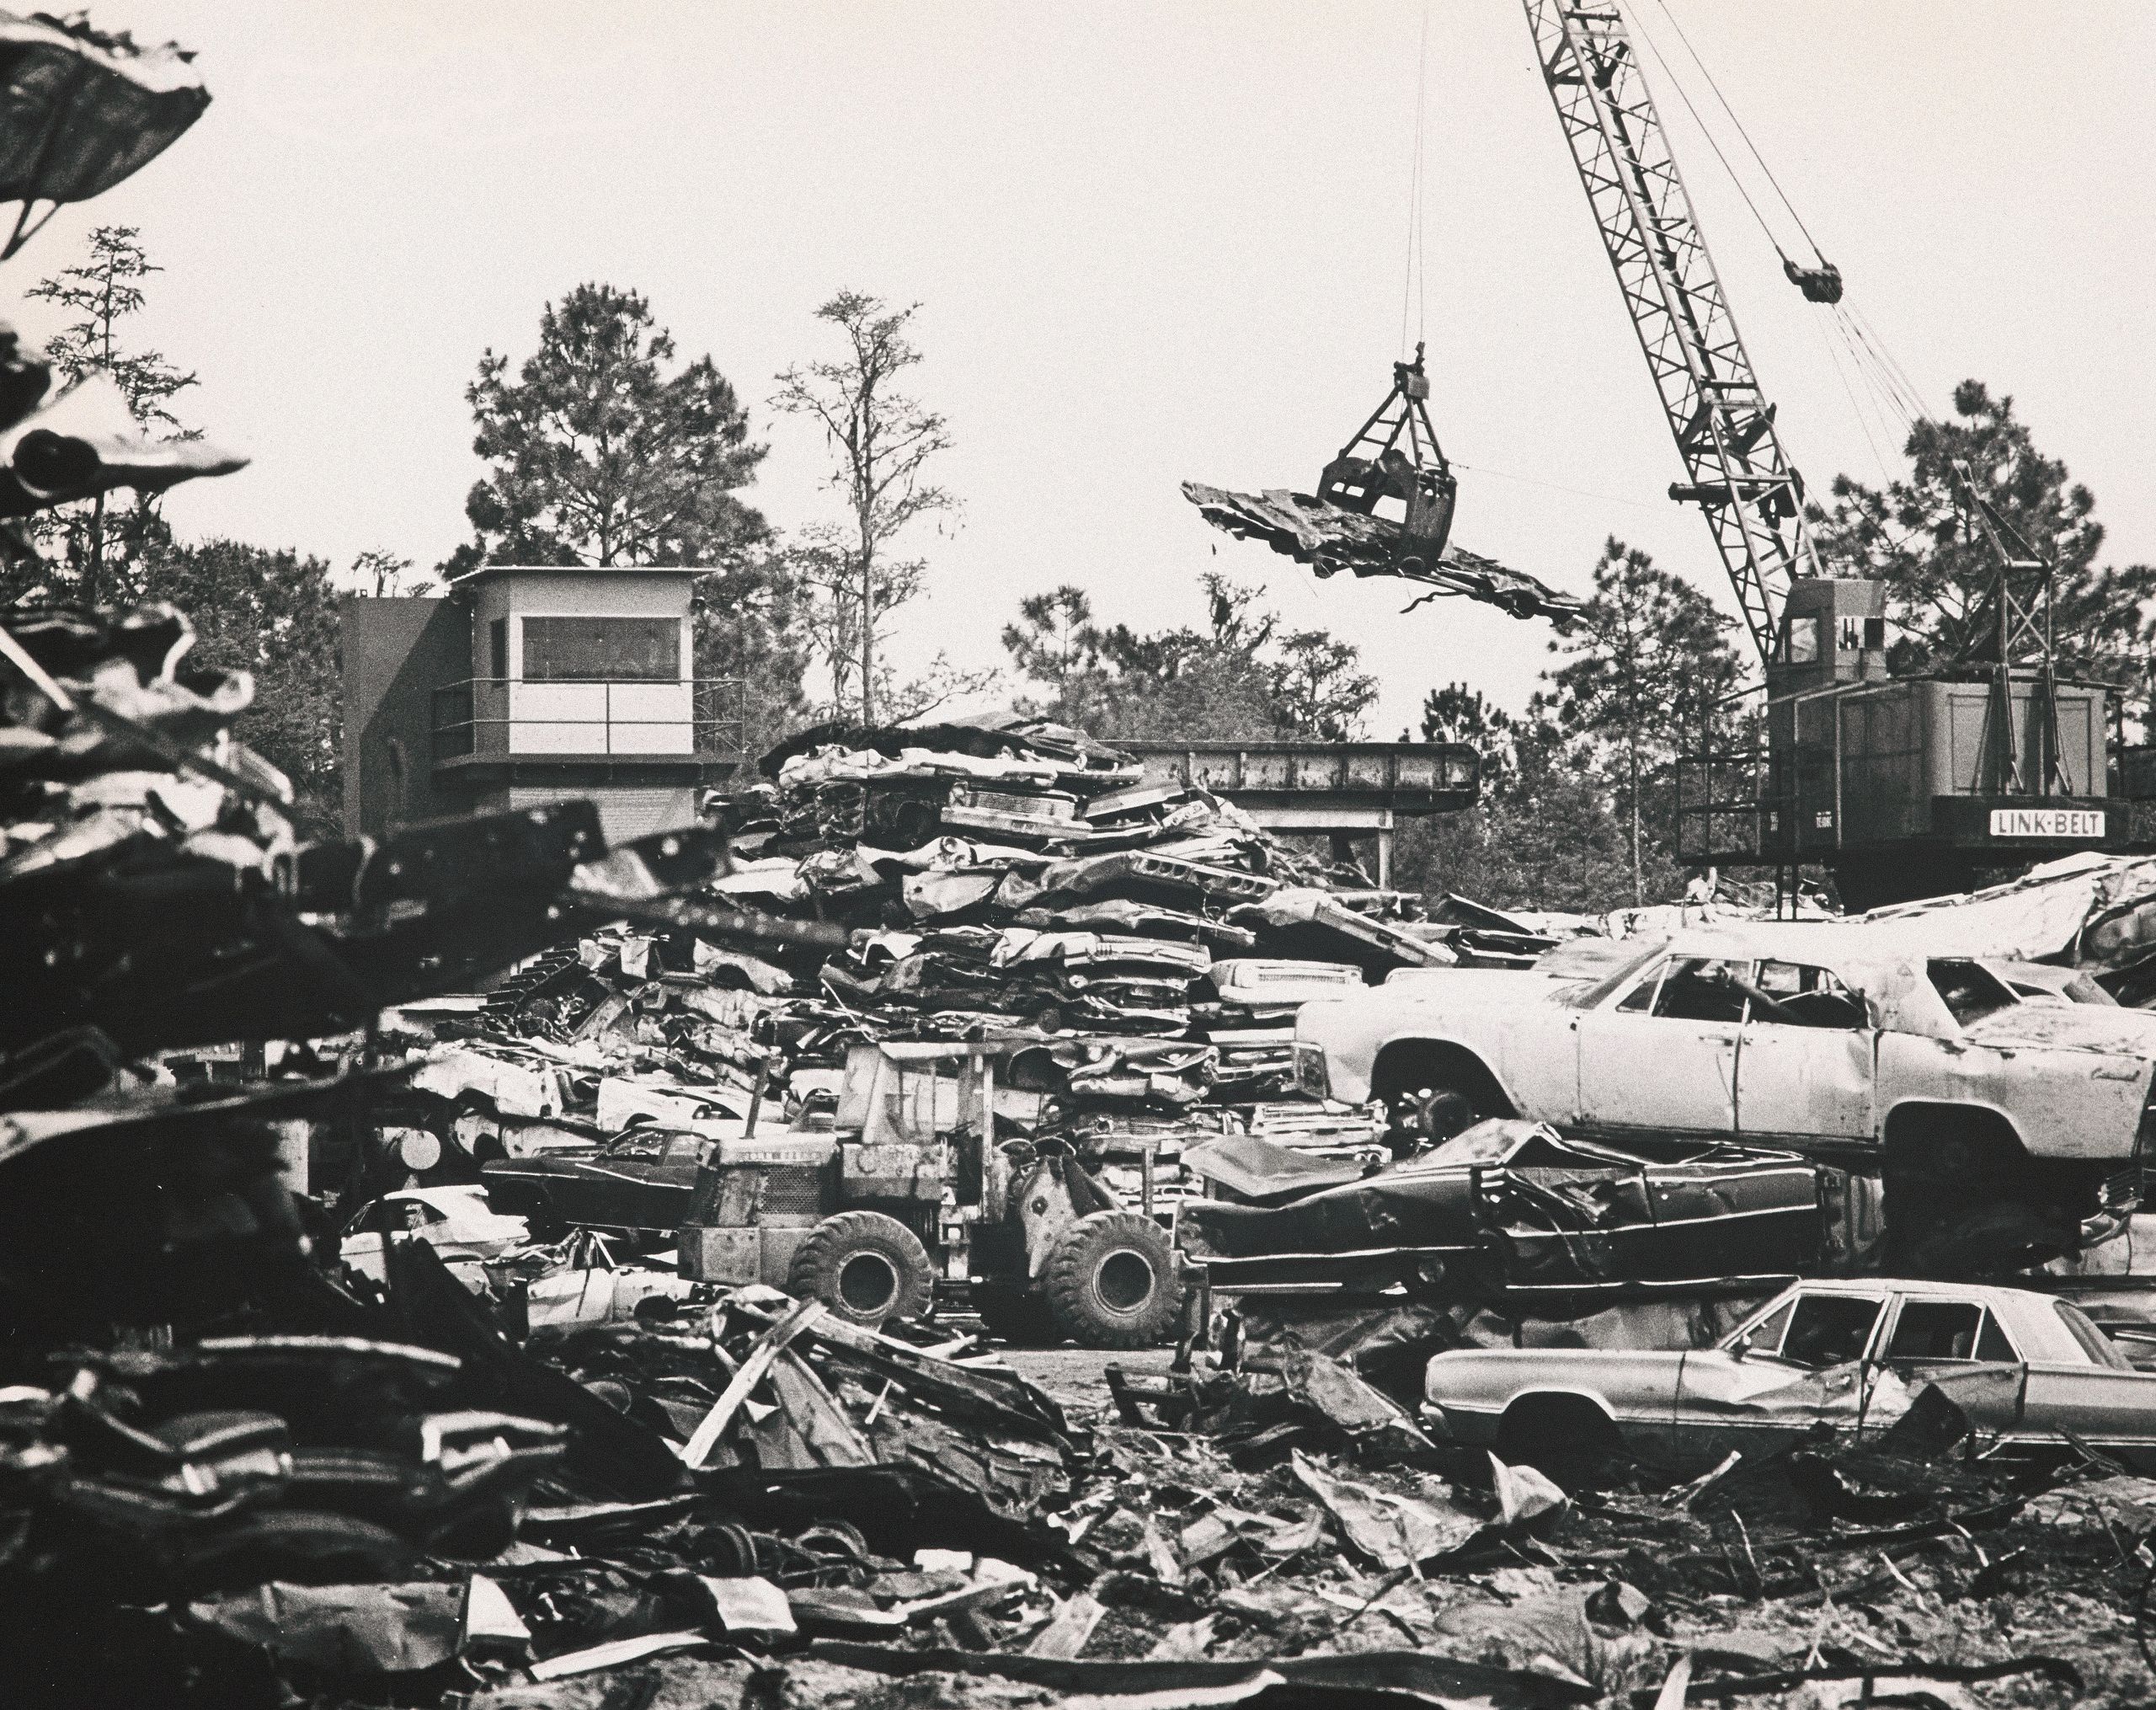 A David J. Joseph Company scrapyard, 1977.